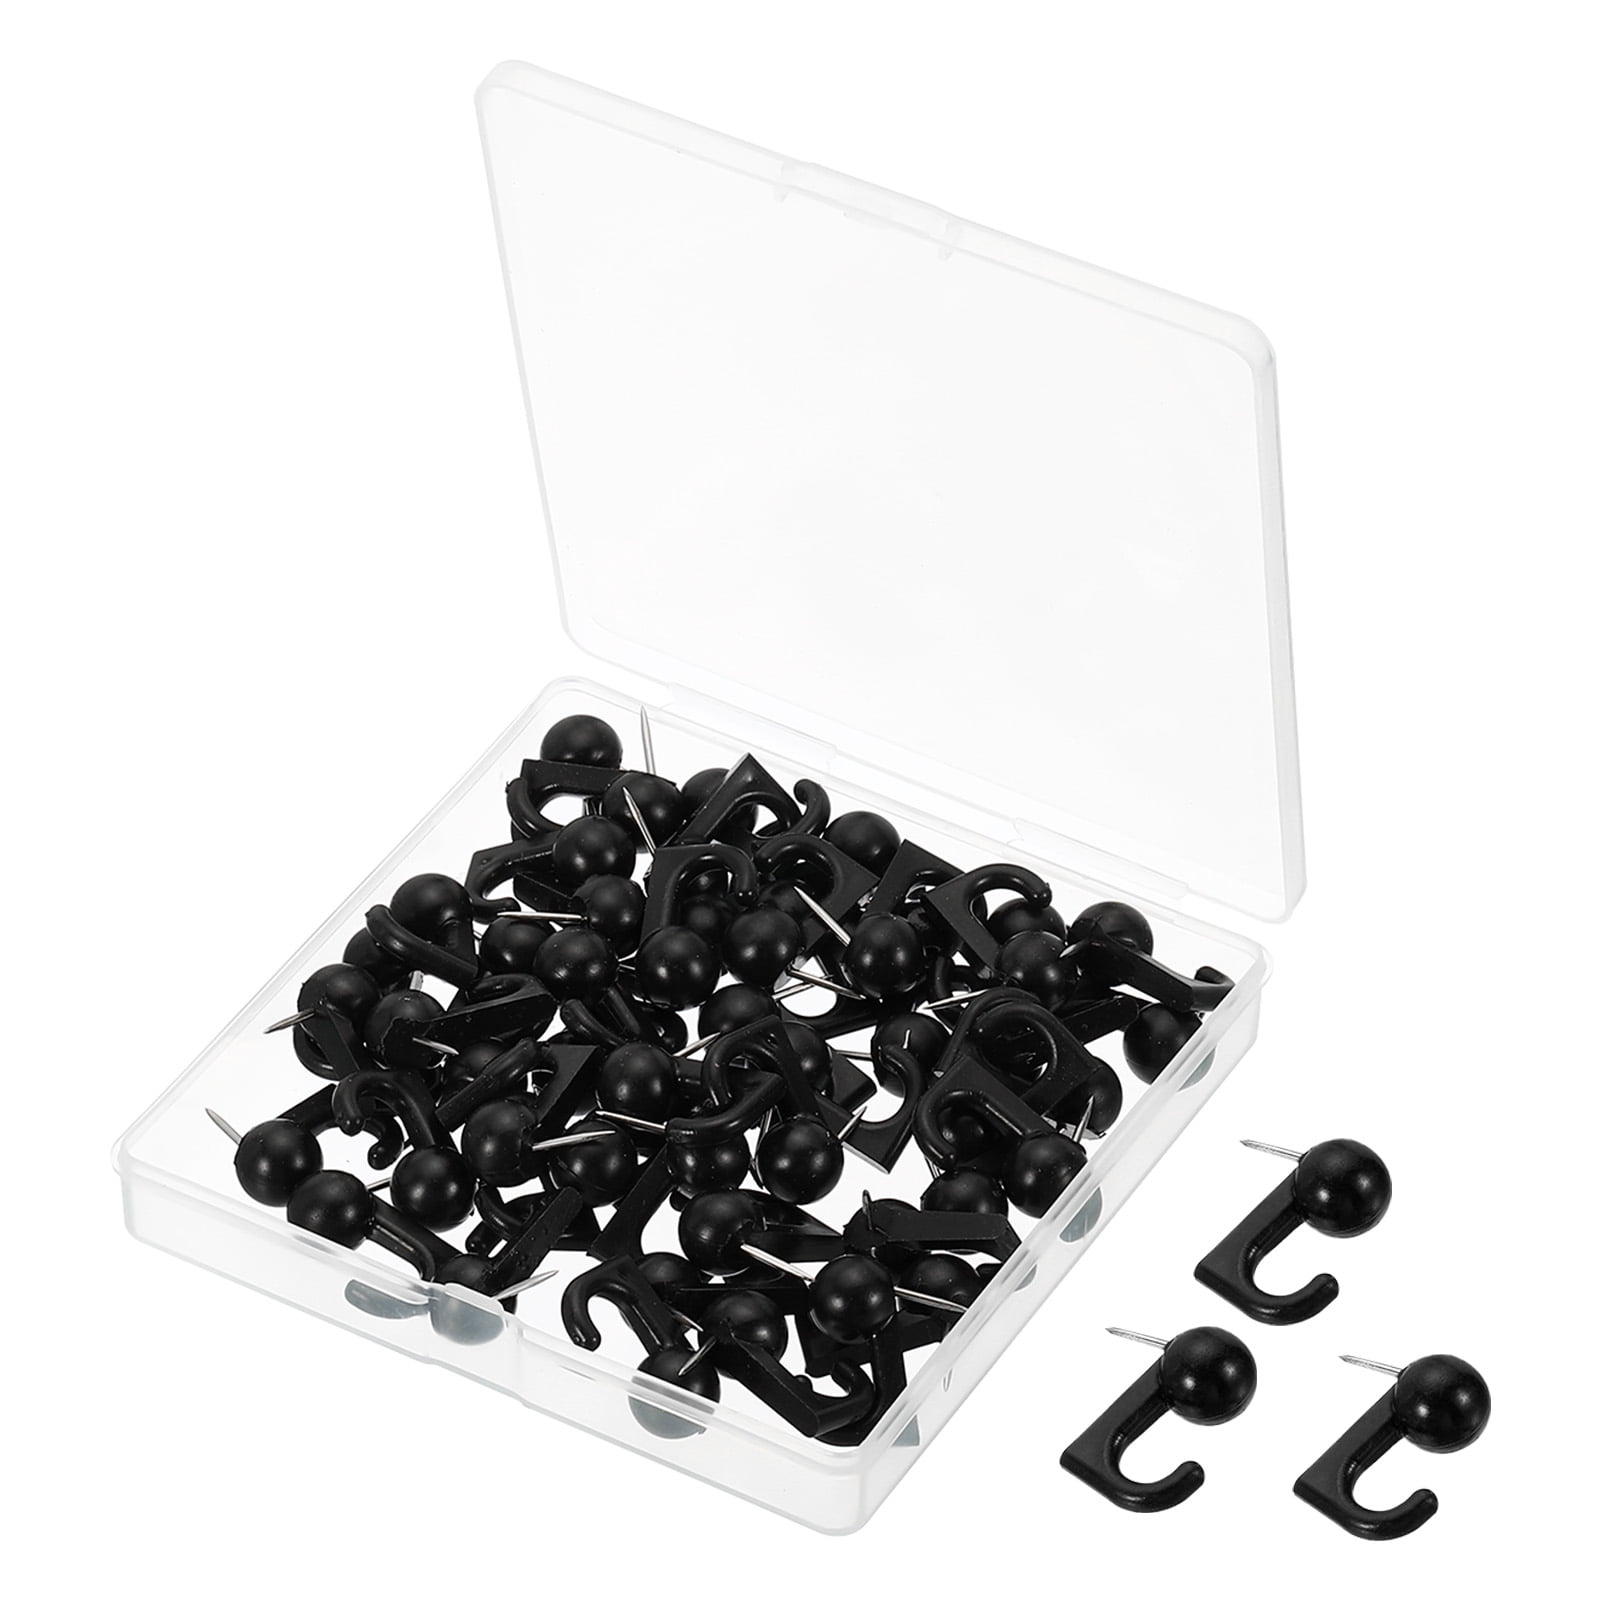 100pcs Push Pin Hooks Plastic Head Wall Thumb Tacks Hanging Nails, Clear, Black - Clear, Black